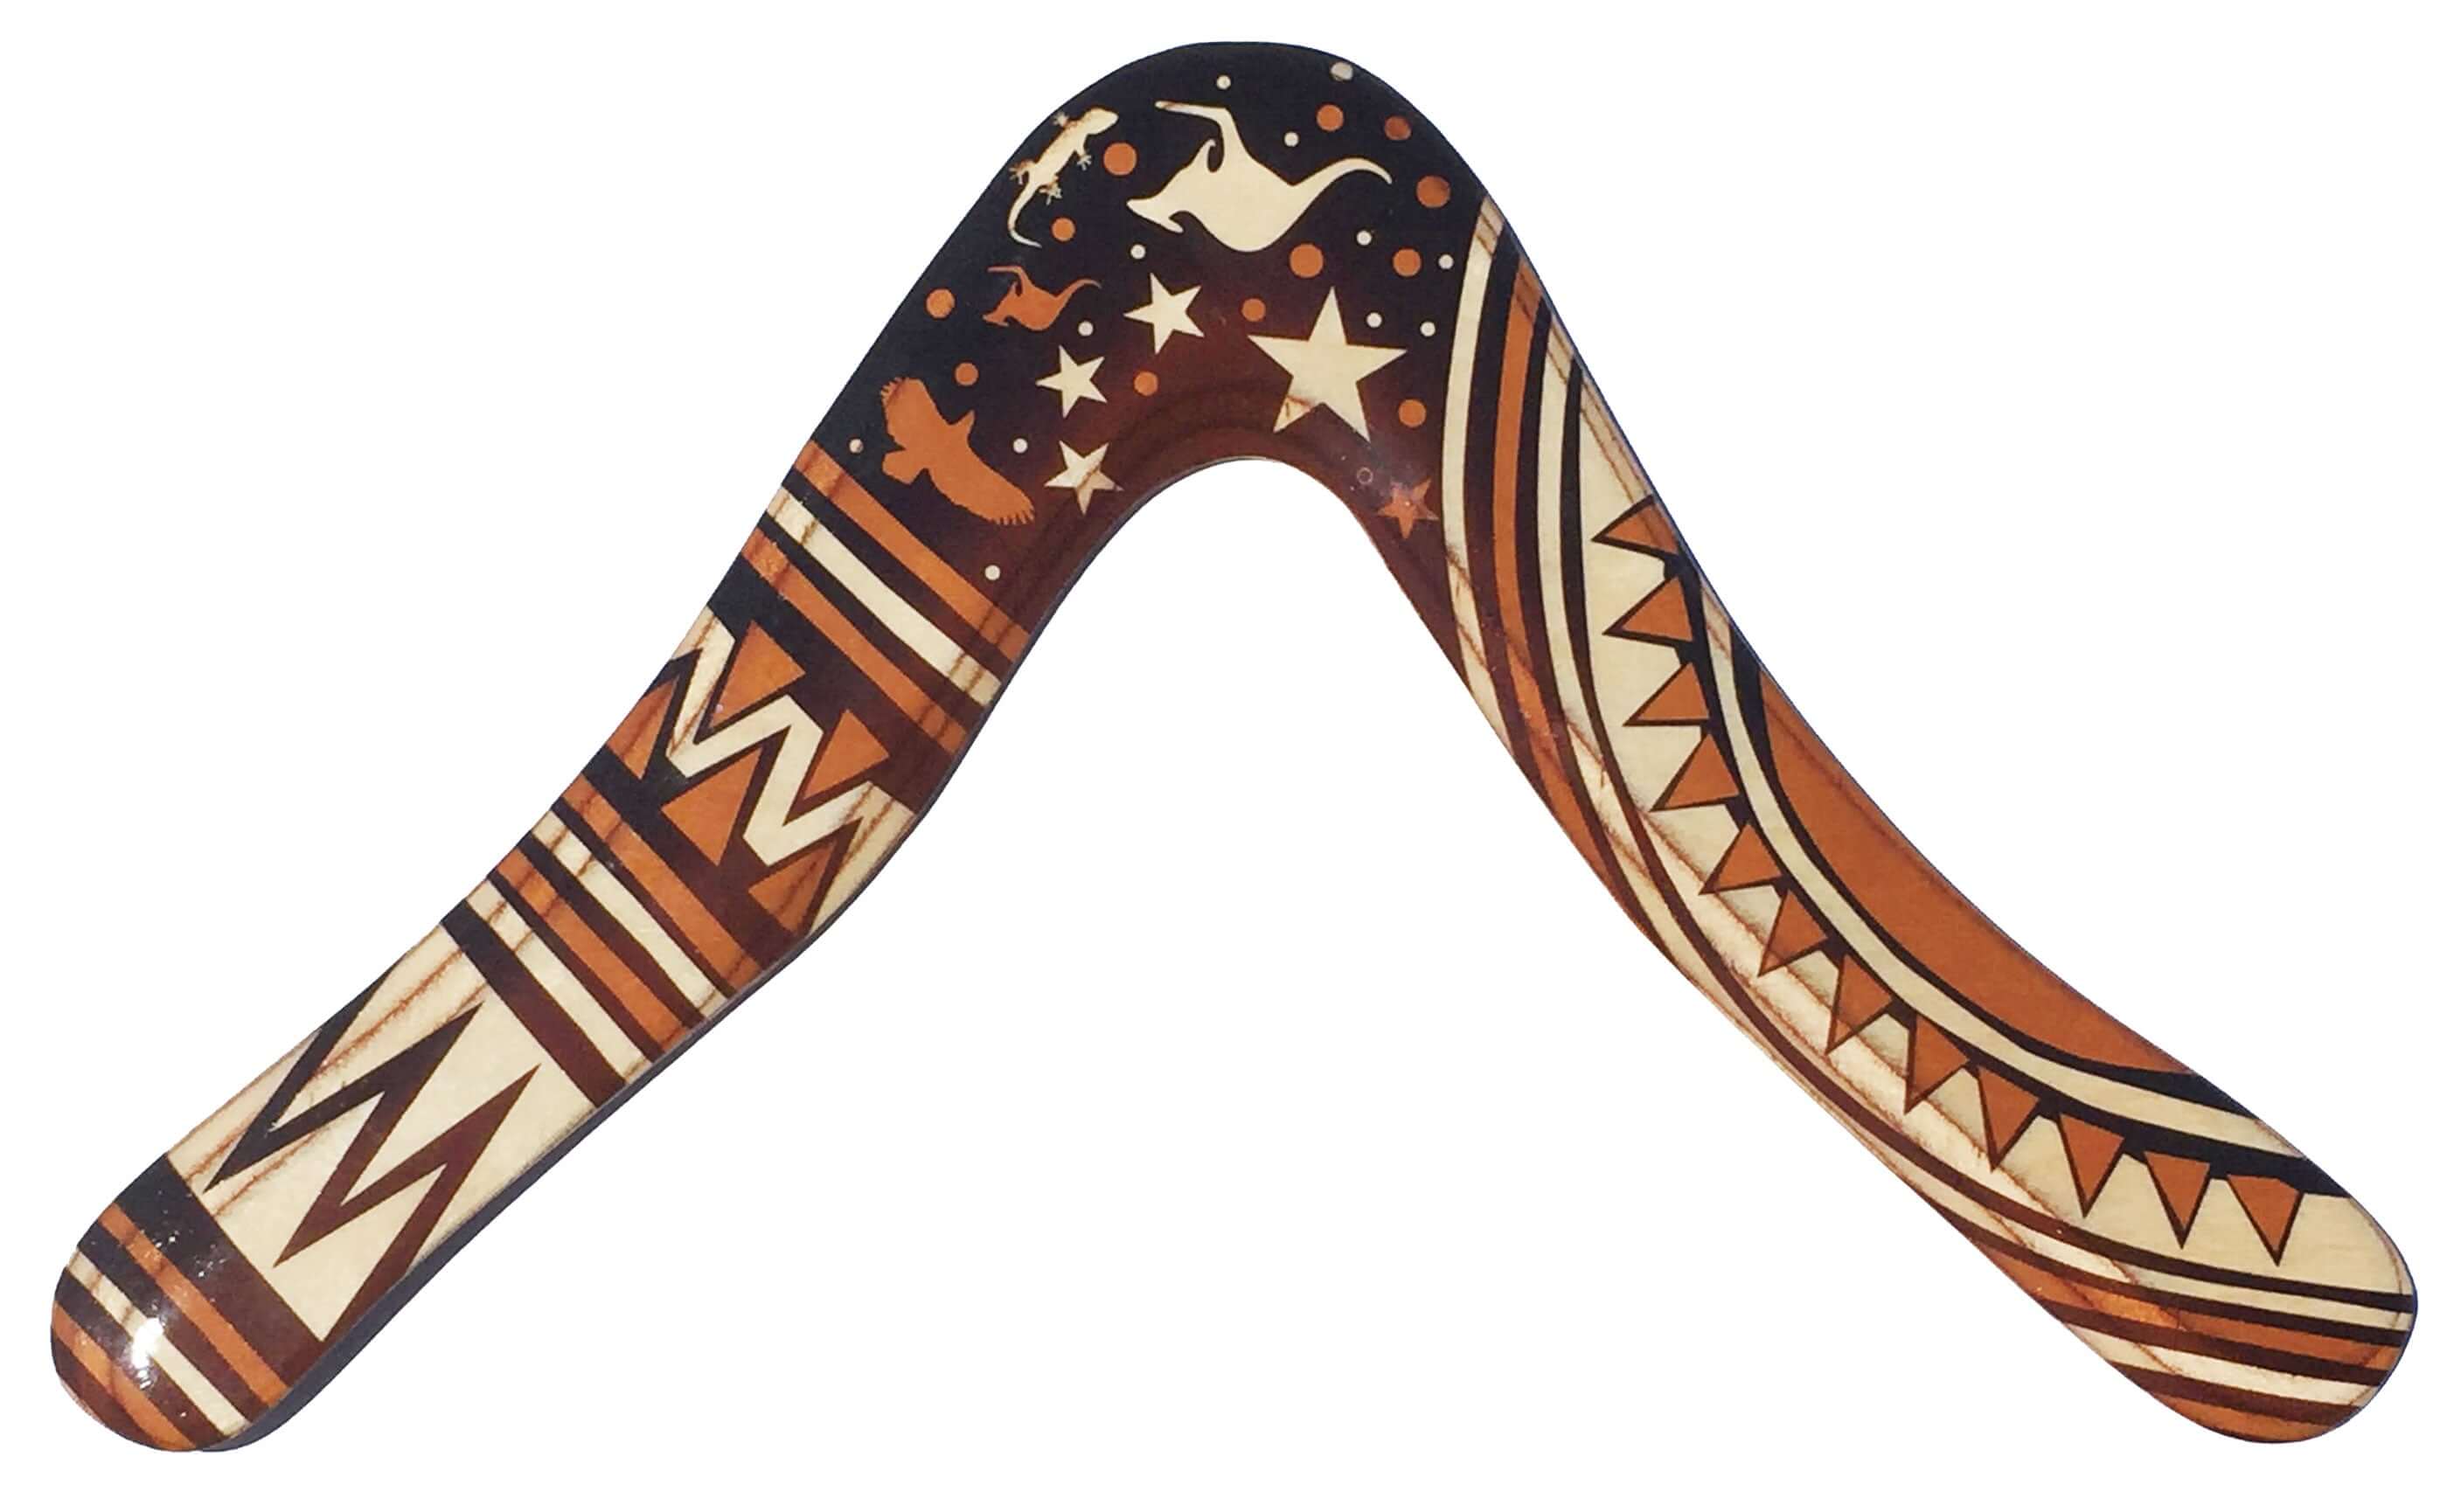 Aussie Fever Decorated Boomerang - Australian Boomerangs.